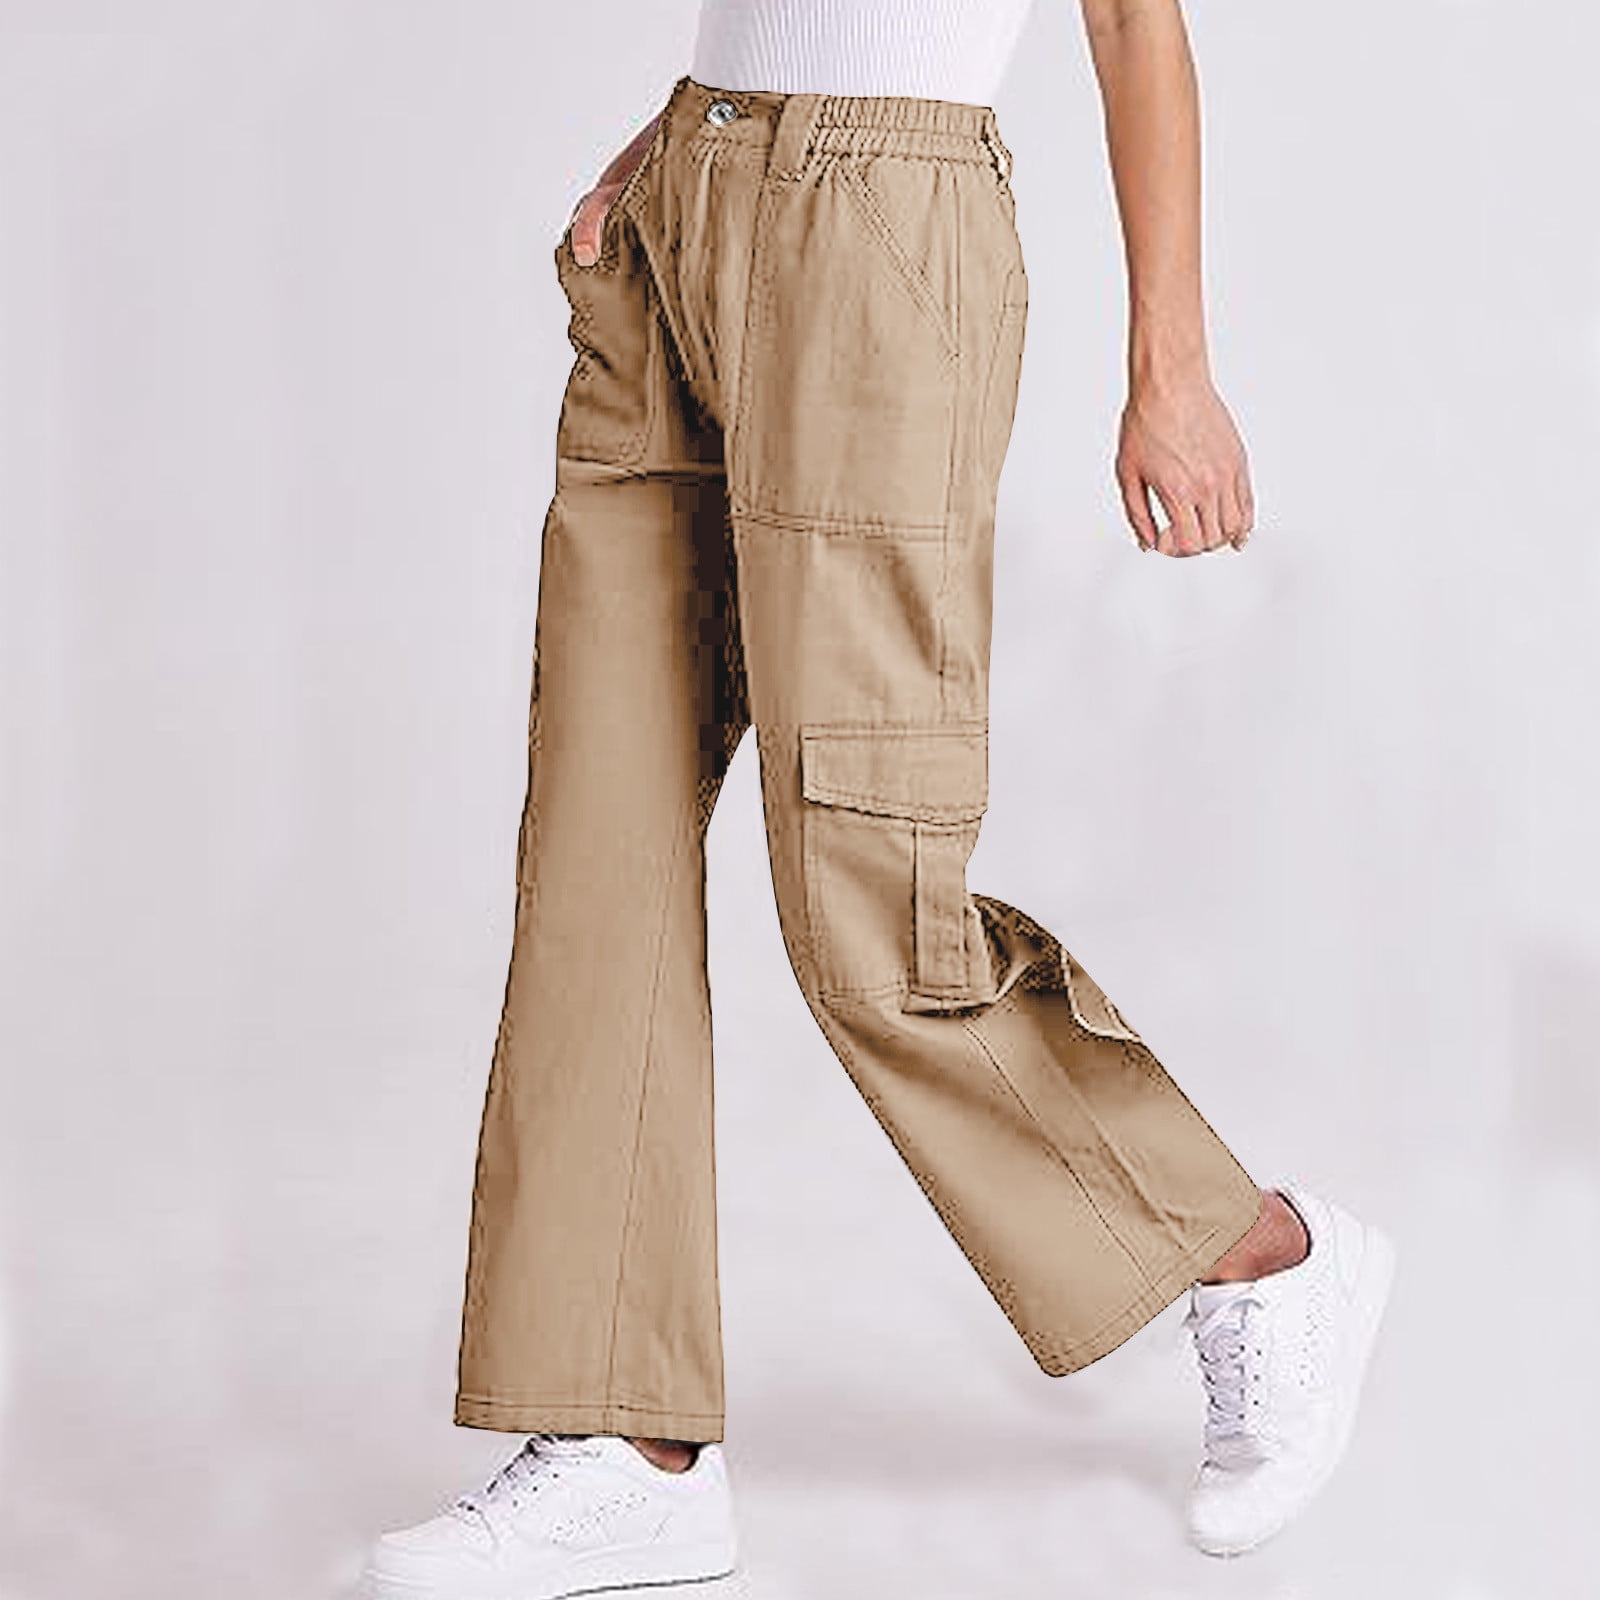 Beautiful Stretchable Cotton Trouser For Women's at Rs 1305.00 | Ladies  Cotton Trouser, Women Cotton Trouser, लेडीज़ कॉटन पैंट - Ramshiv Exports,  Coimbatore | ID: 26133682391